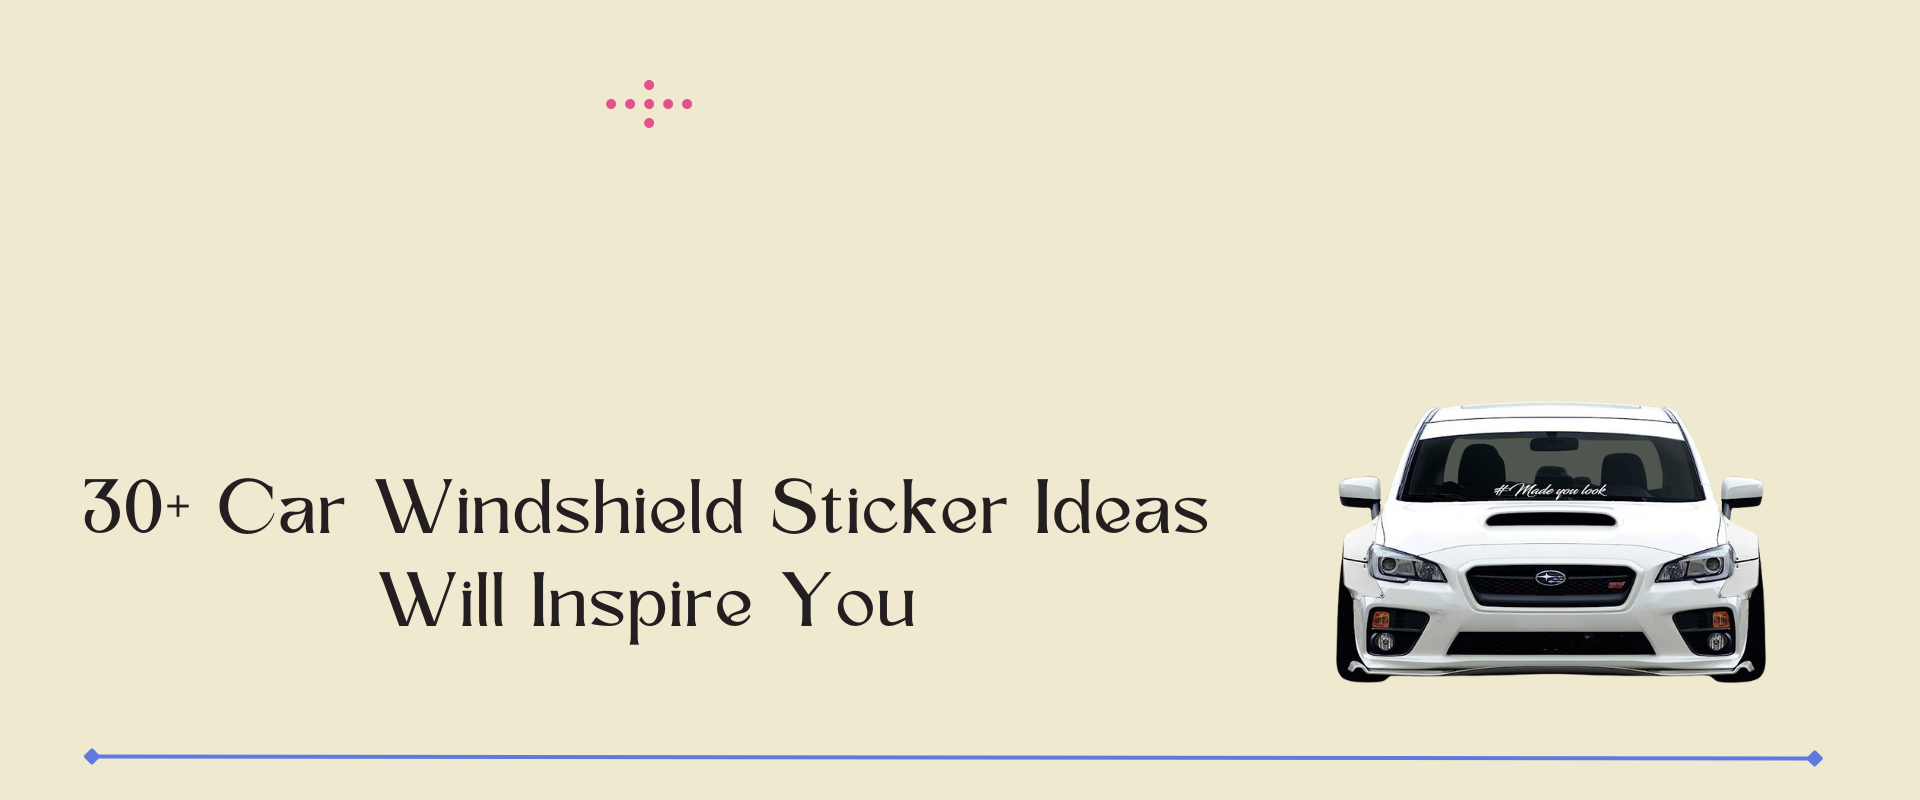 30+ Creative Car Windshield Sticker Ideas will inspire you